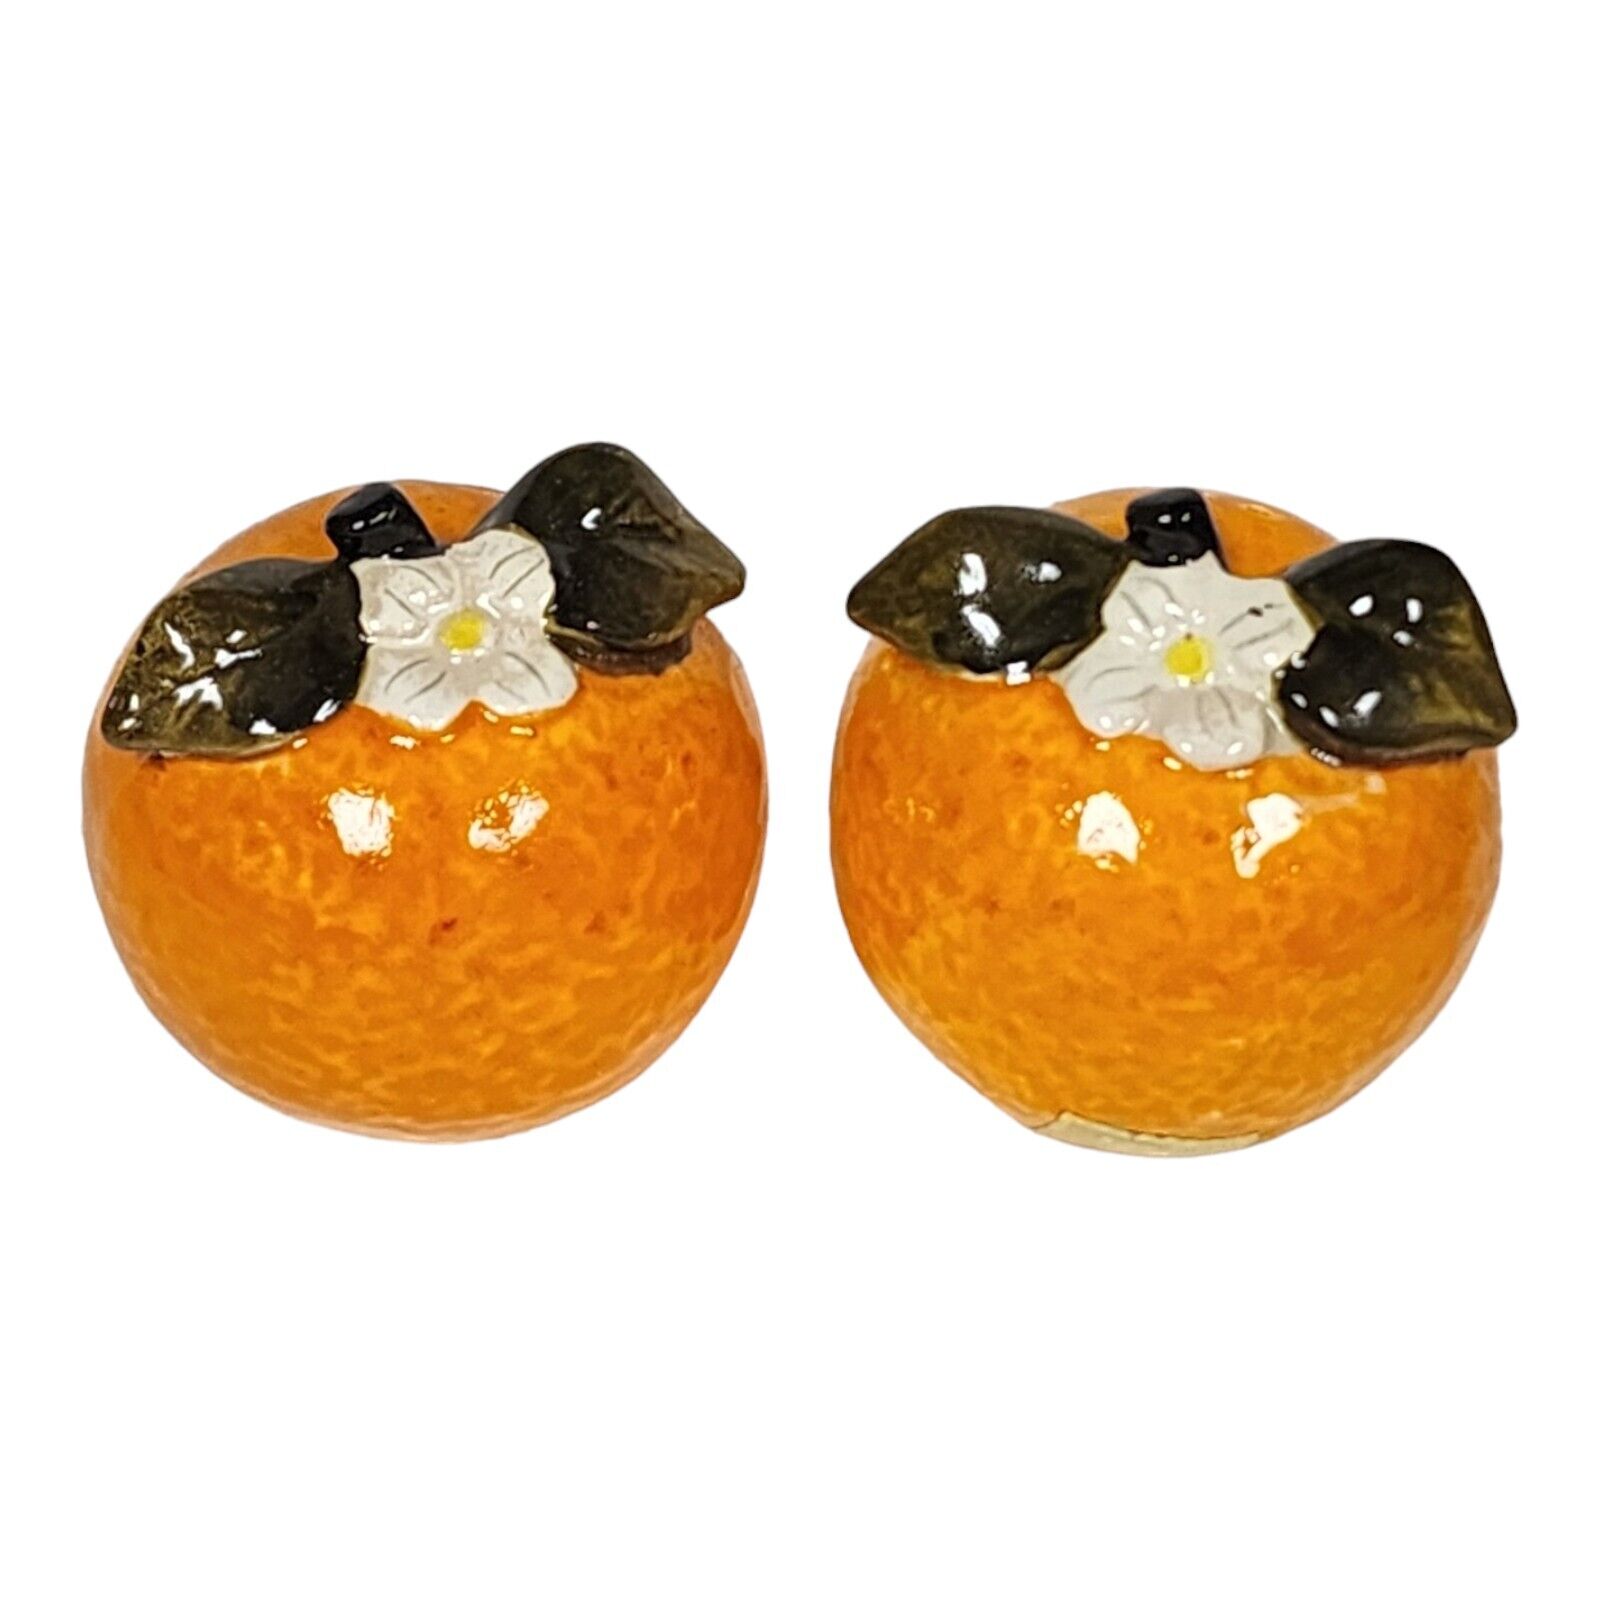 Vtg HH 0100 Japan Ceramic Oranges Salt Pepper Shakers 60s MCM Fruit Table Decor